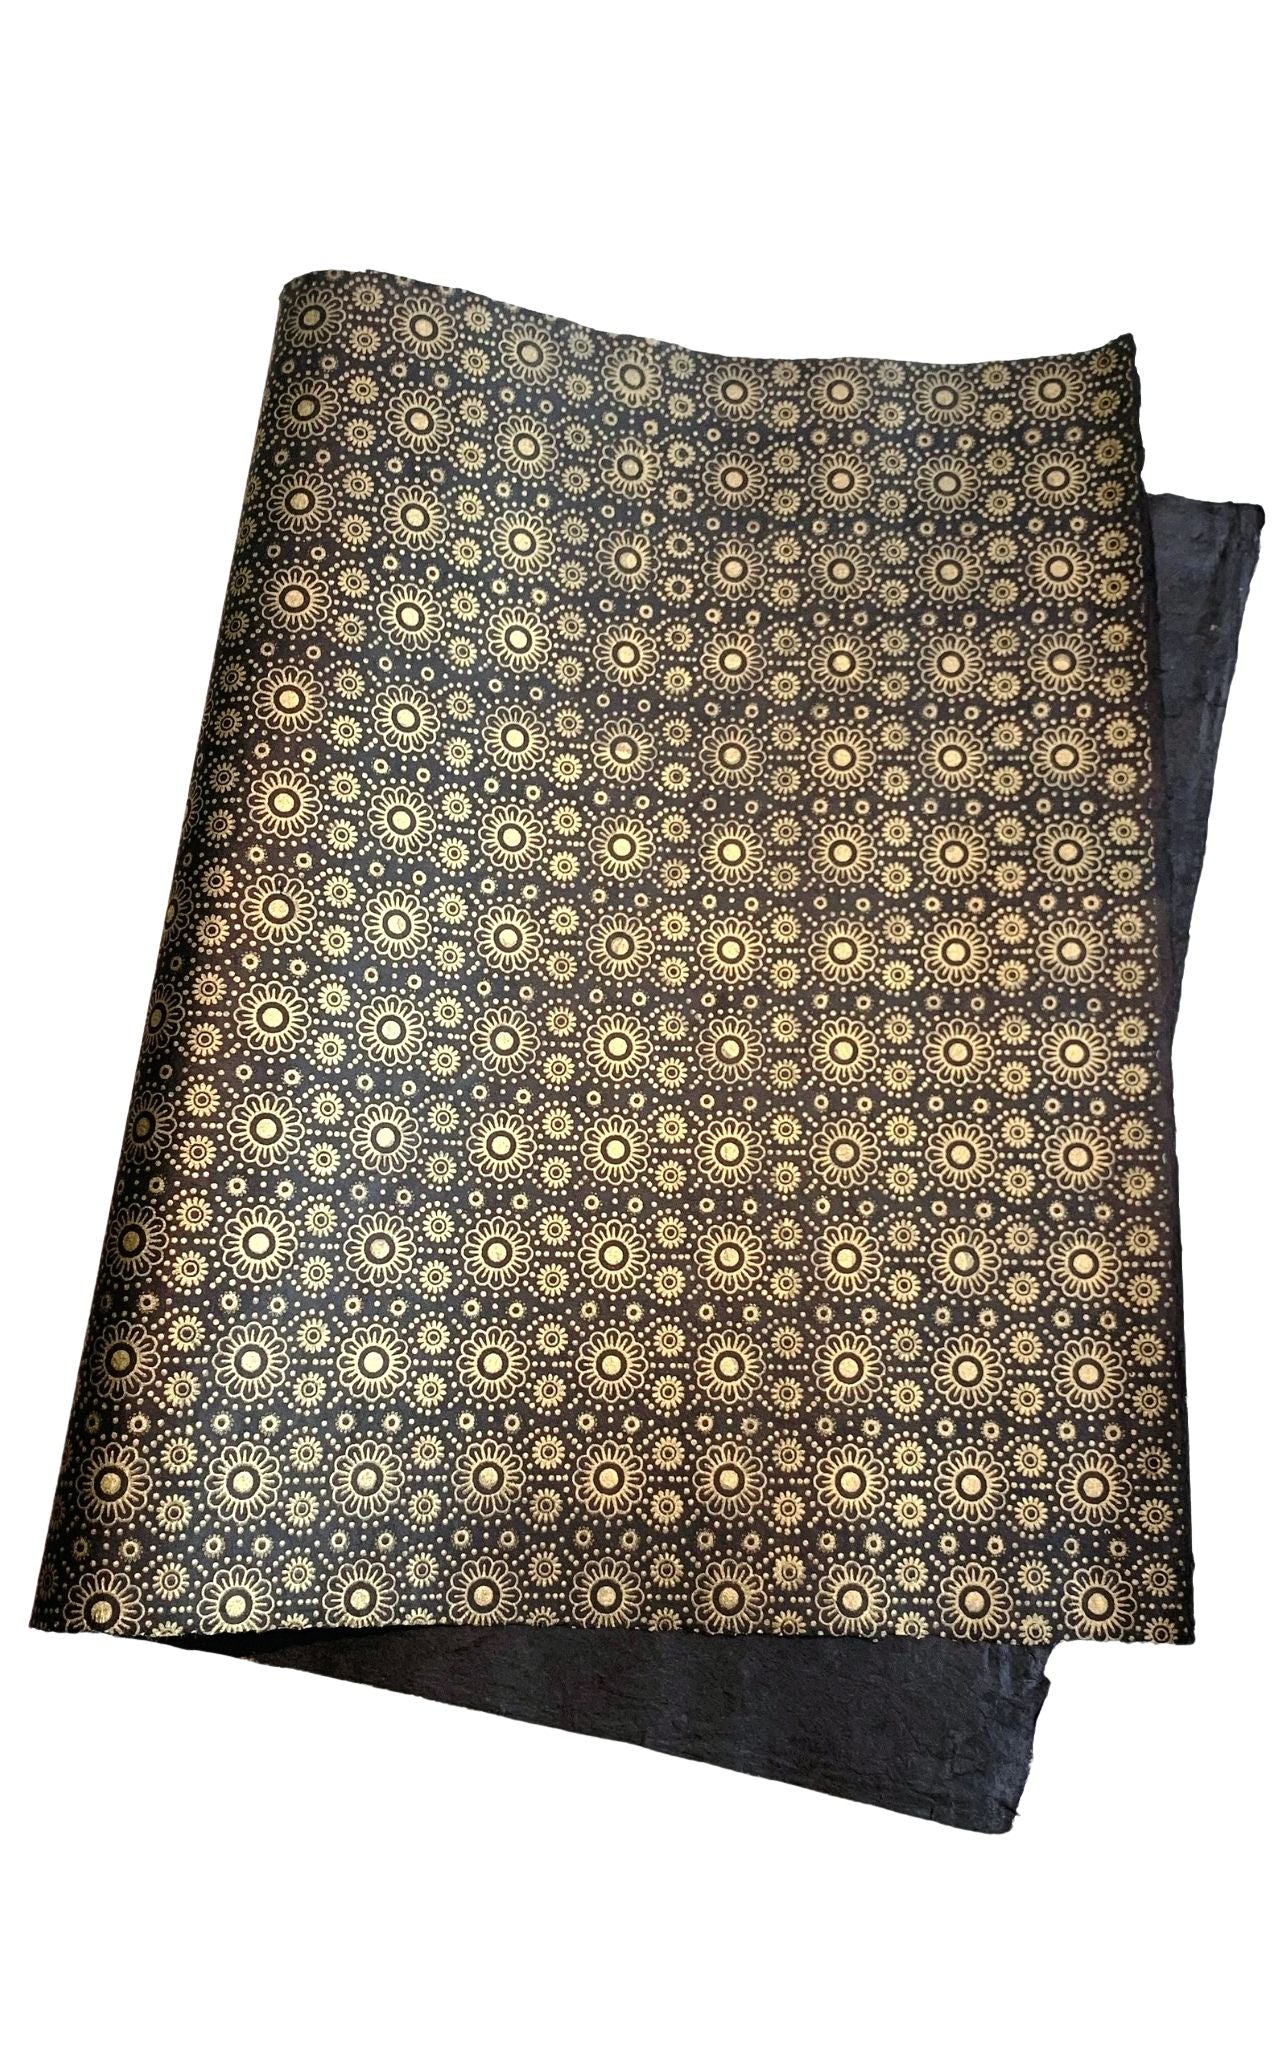 Surya Australia Fairtrade treeless Lokta Paper Sheets from Nepal - Black wth gold flower printing